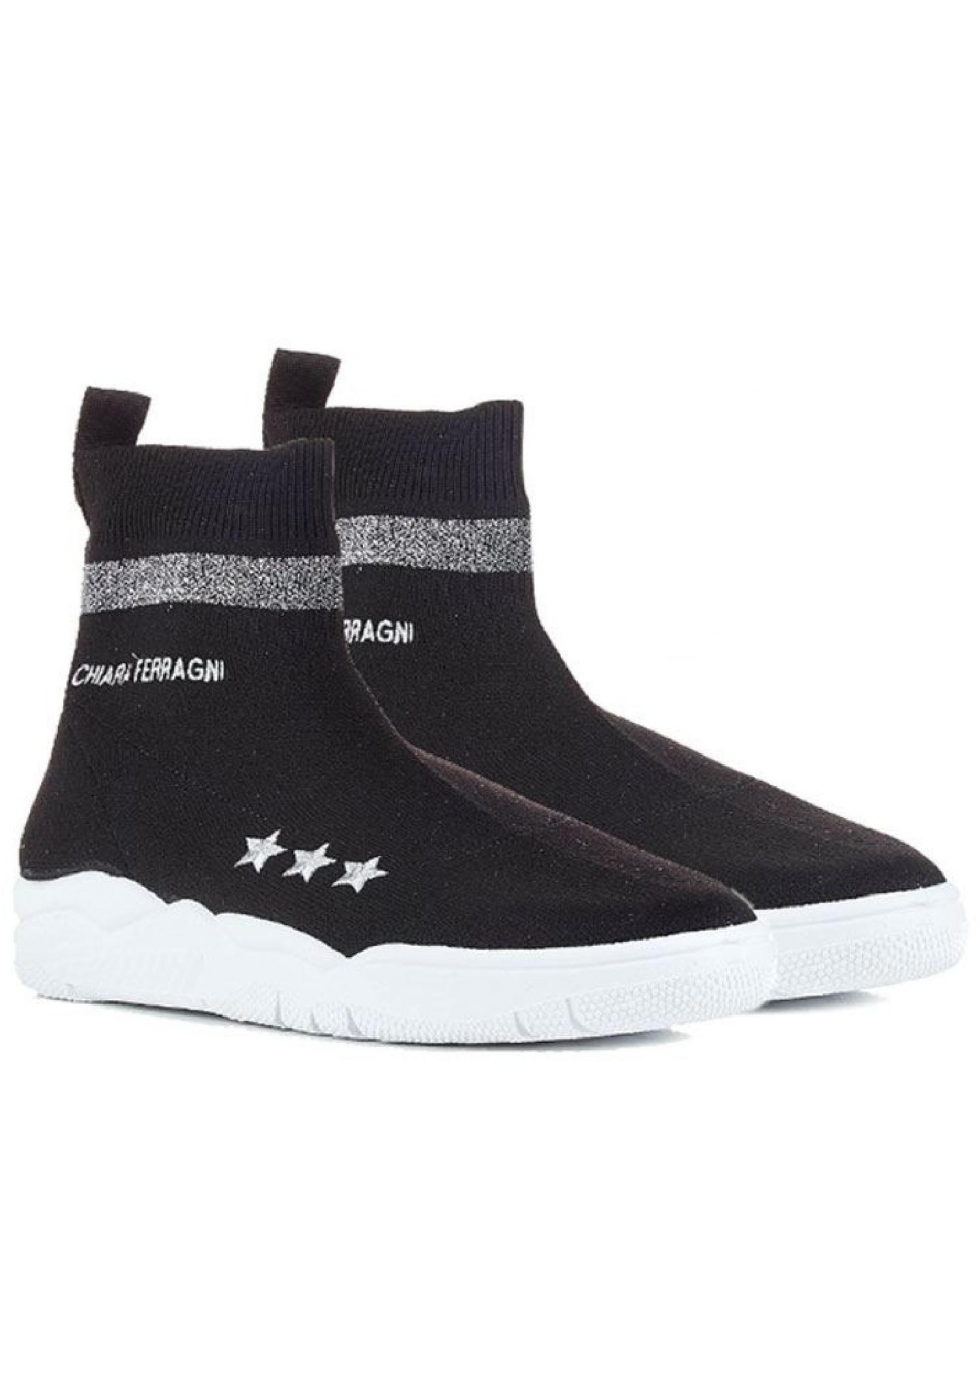 Chiara Ferragni black knitted hi top sneakers shoes - Italian Boutique